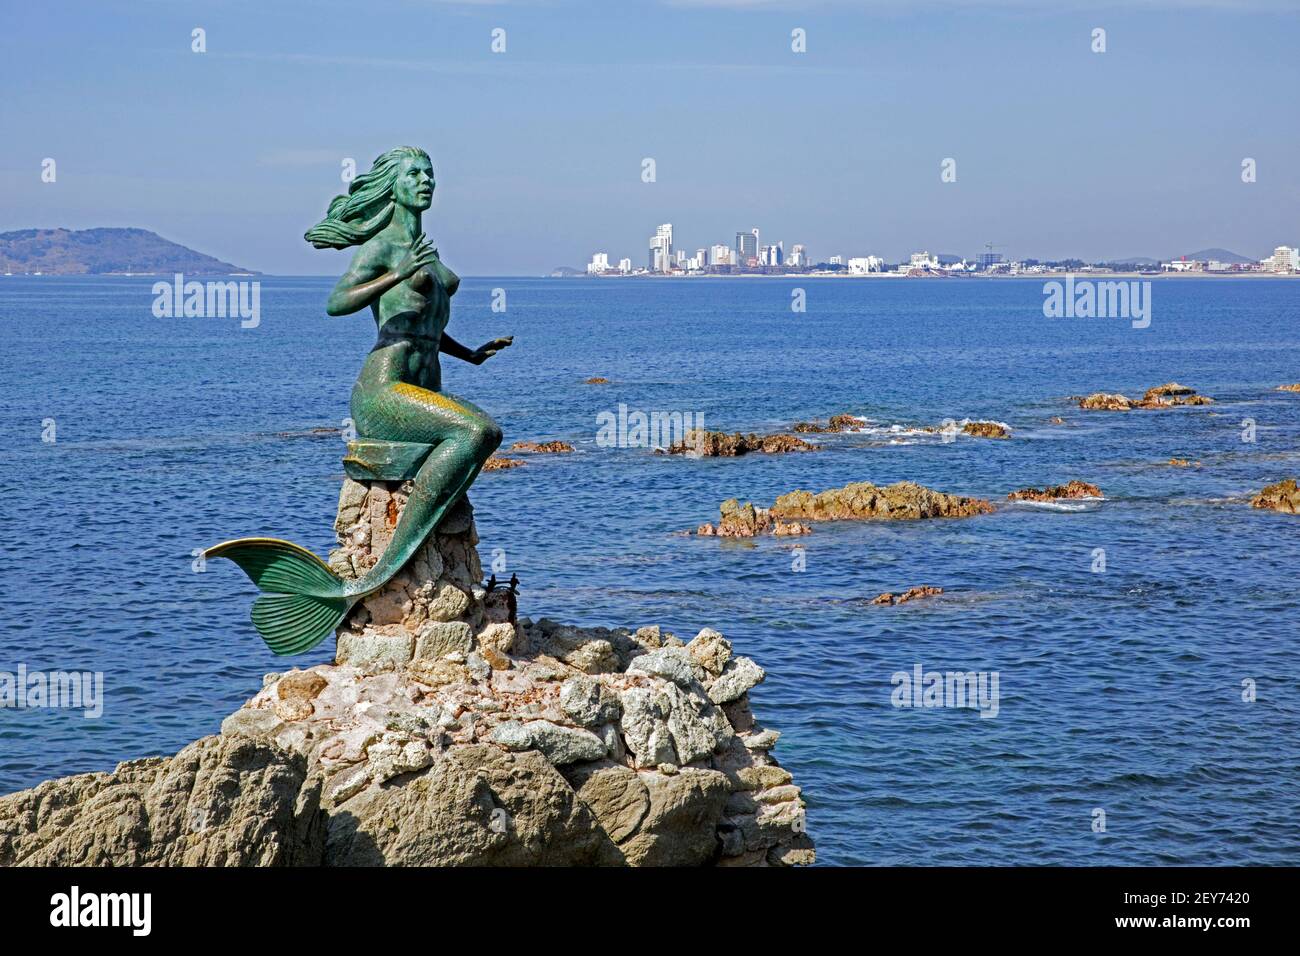 Sculpture en bronze la Sirena / la Sirène le long de la Malecón, esplanade dans la ville de Mazatlán, Sinaloa, Mexique Banque D'Images